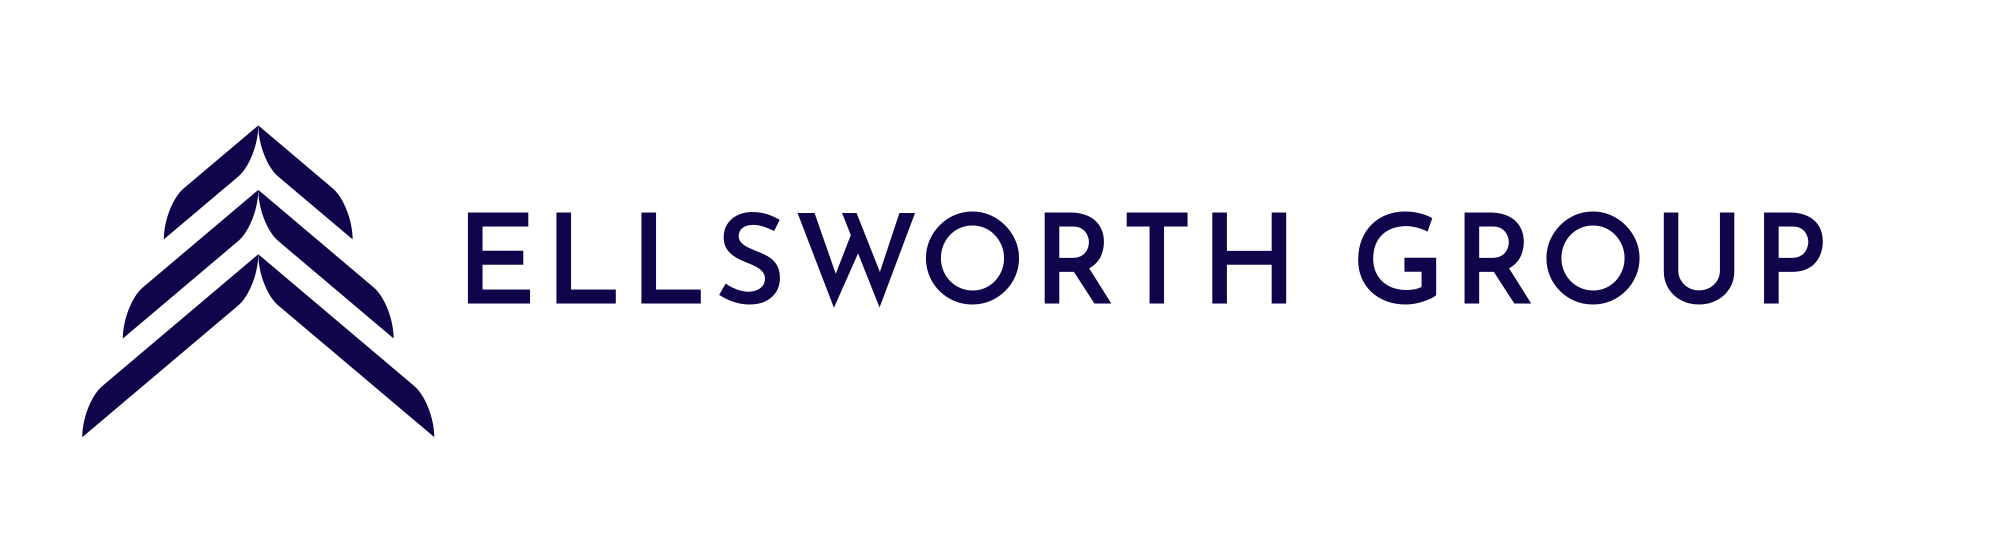 Ellsworth Group Logo